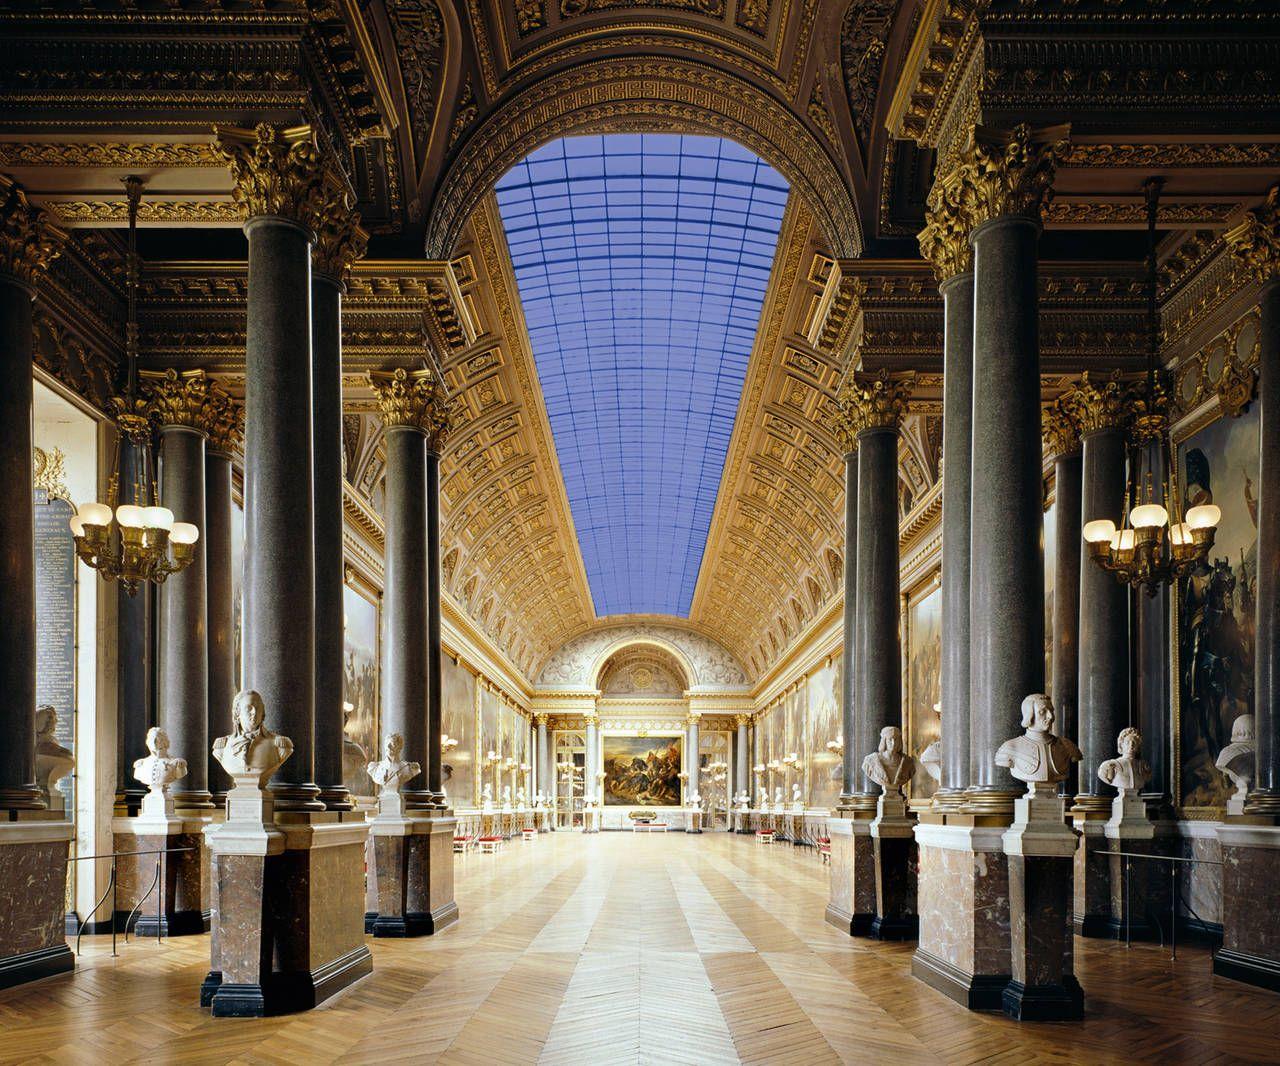 Chateau Versailles I, France (Portrait of Interiors)